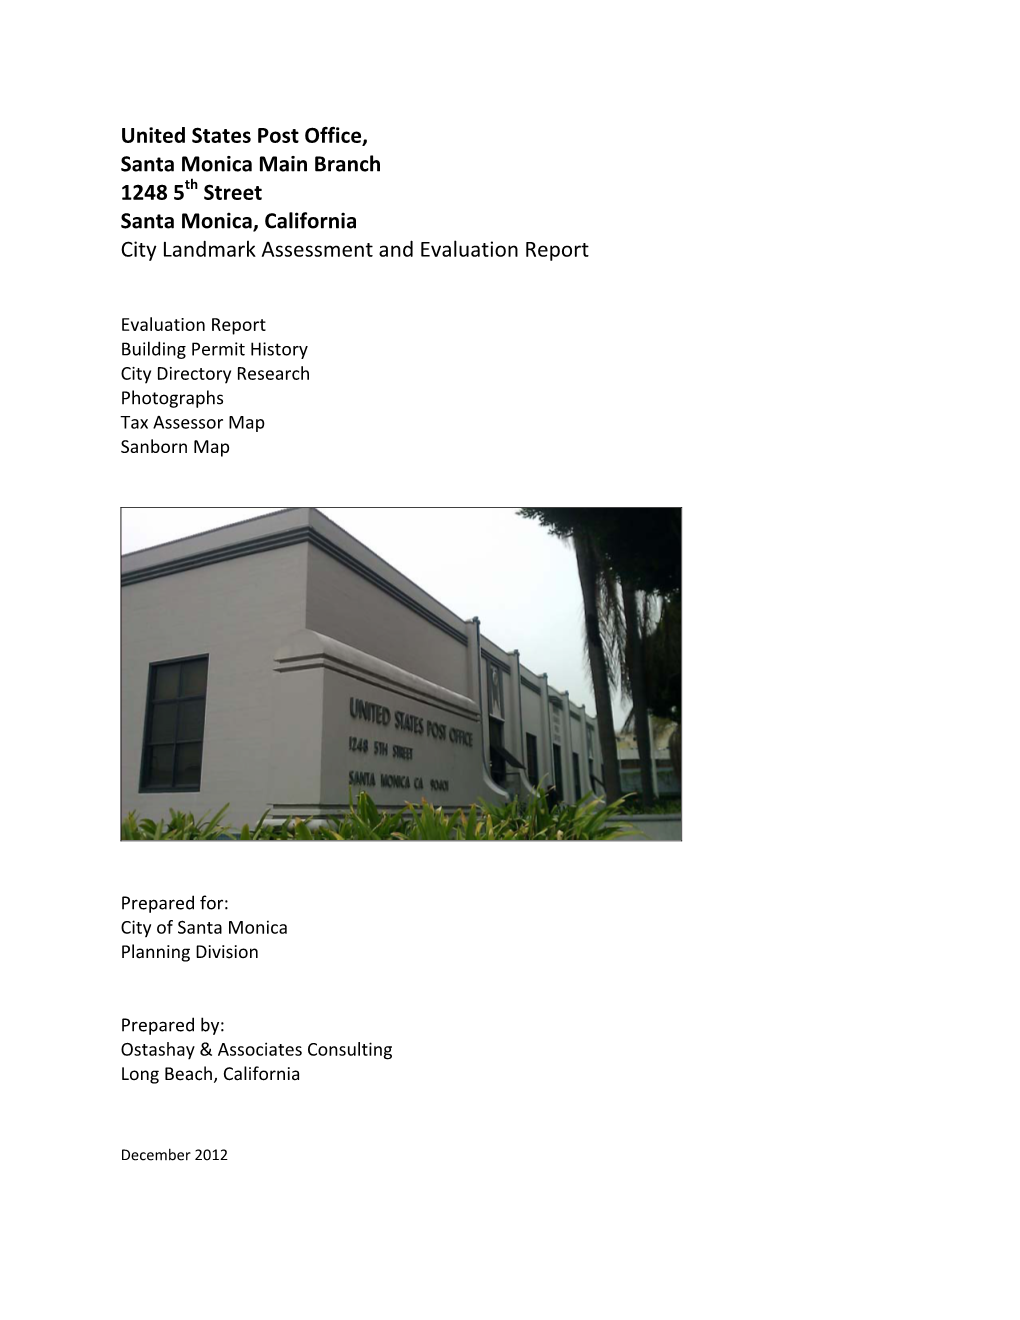 United States Post Office, Santa Monica Main Branch 1248 5Th Street Santa Monica, California City Landmark Assessment and Evaluation Report